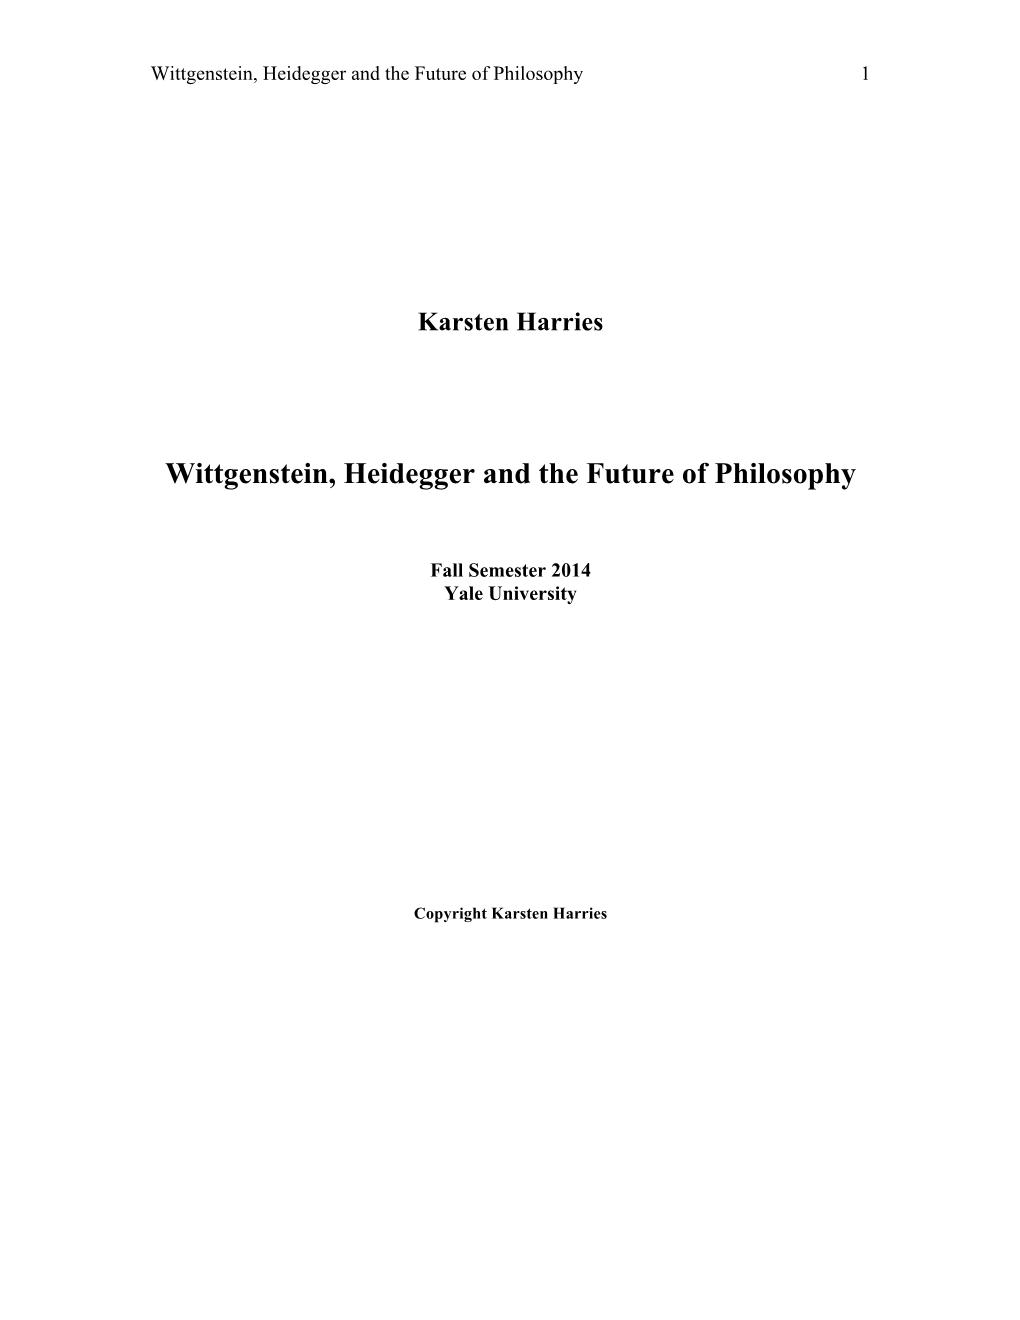 Heidegger, Wittgenstein, and the Future of Philosophy